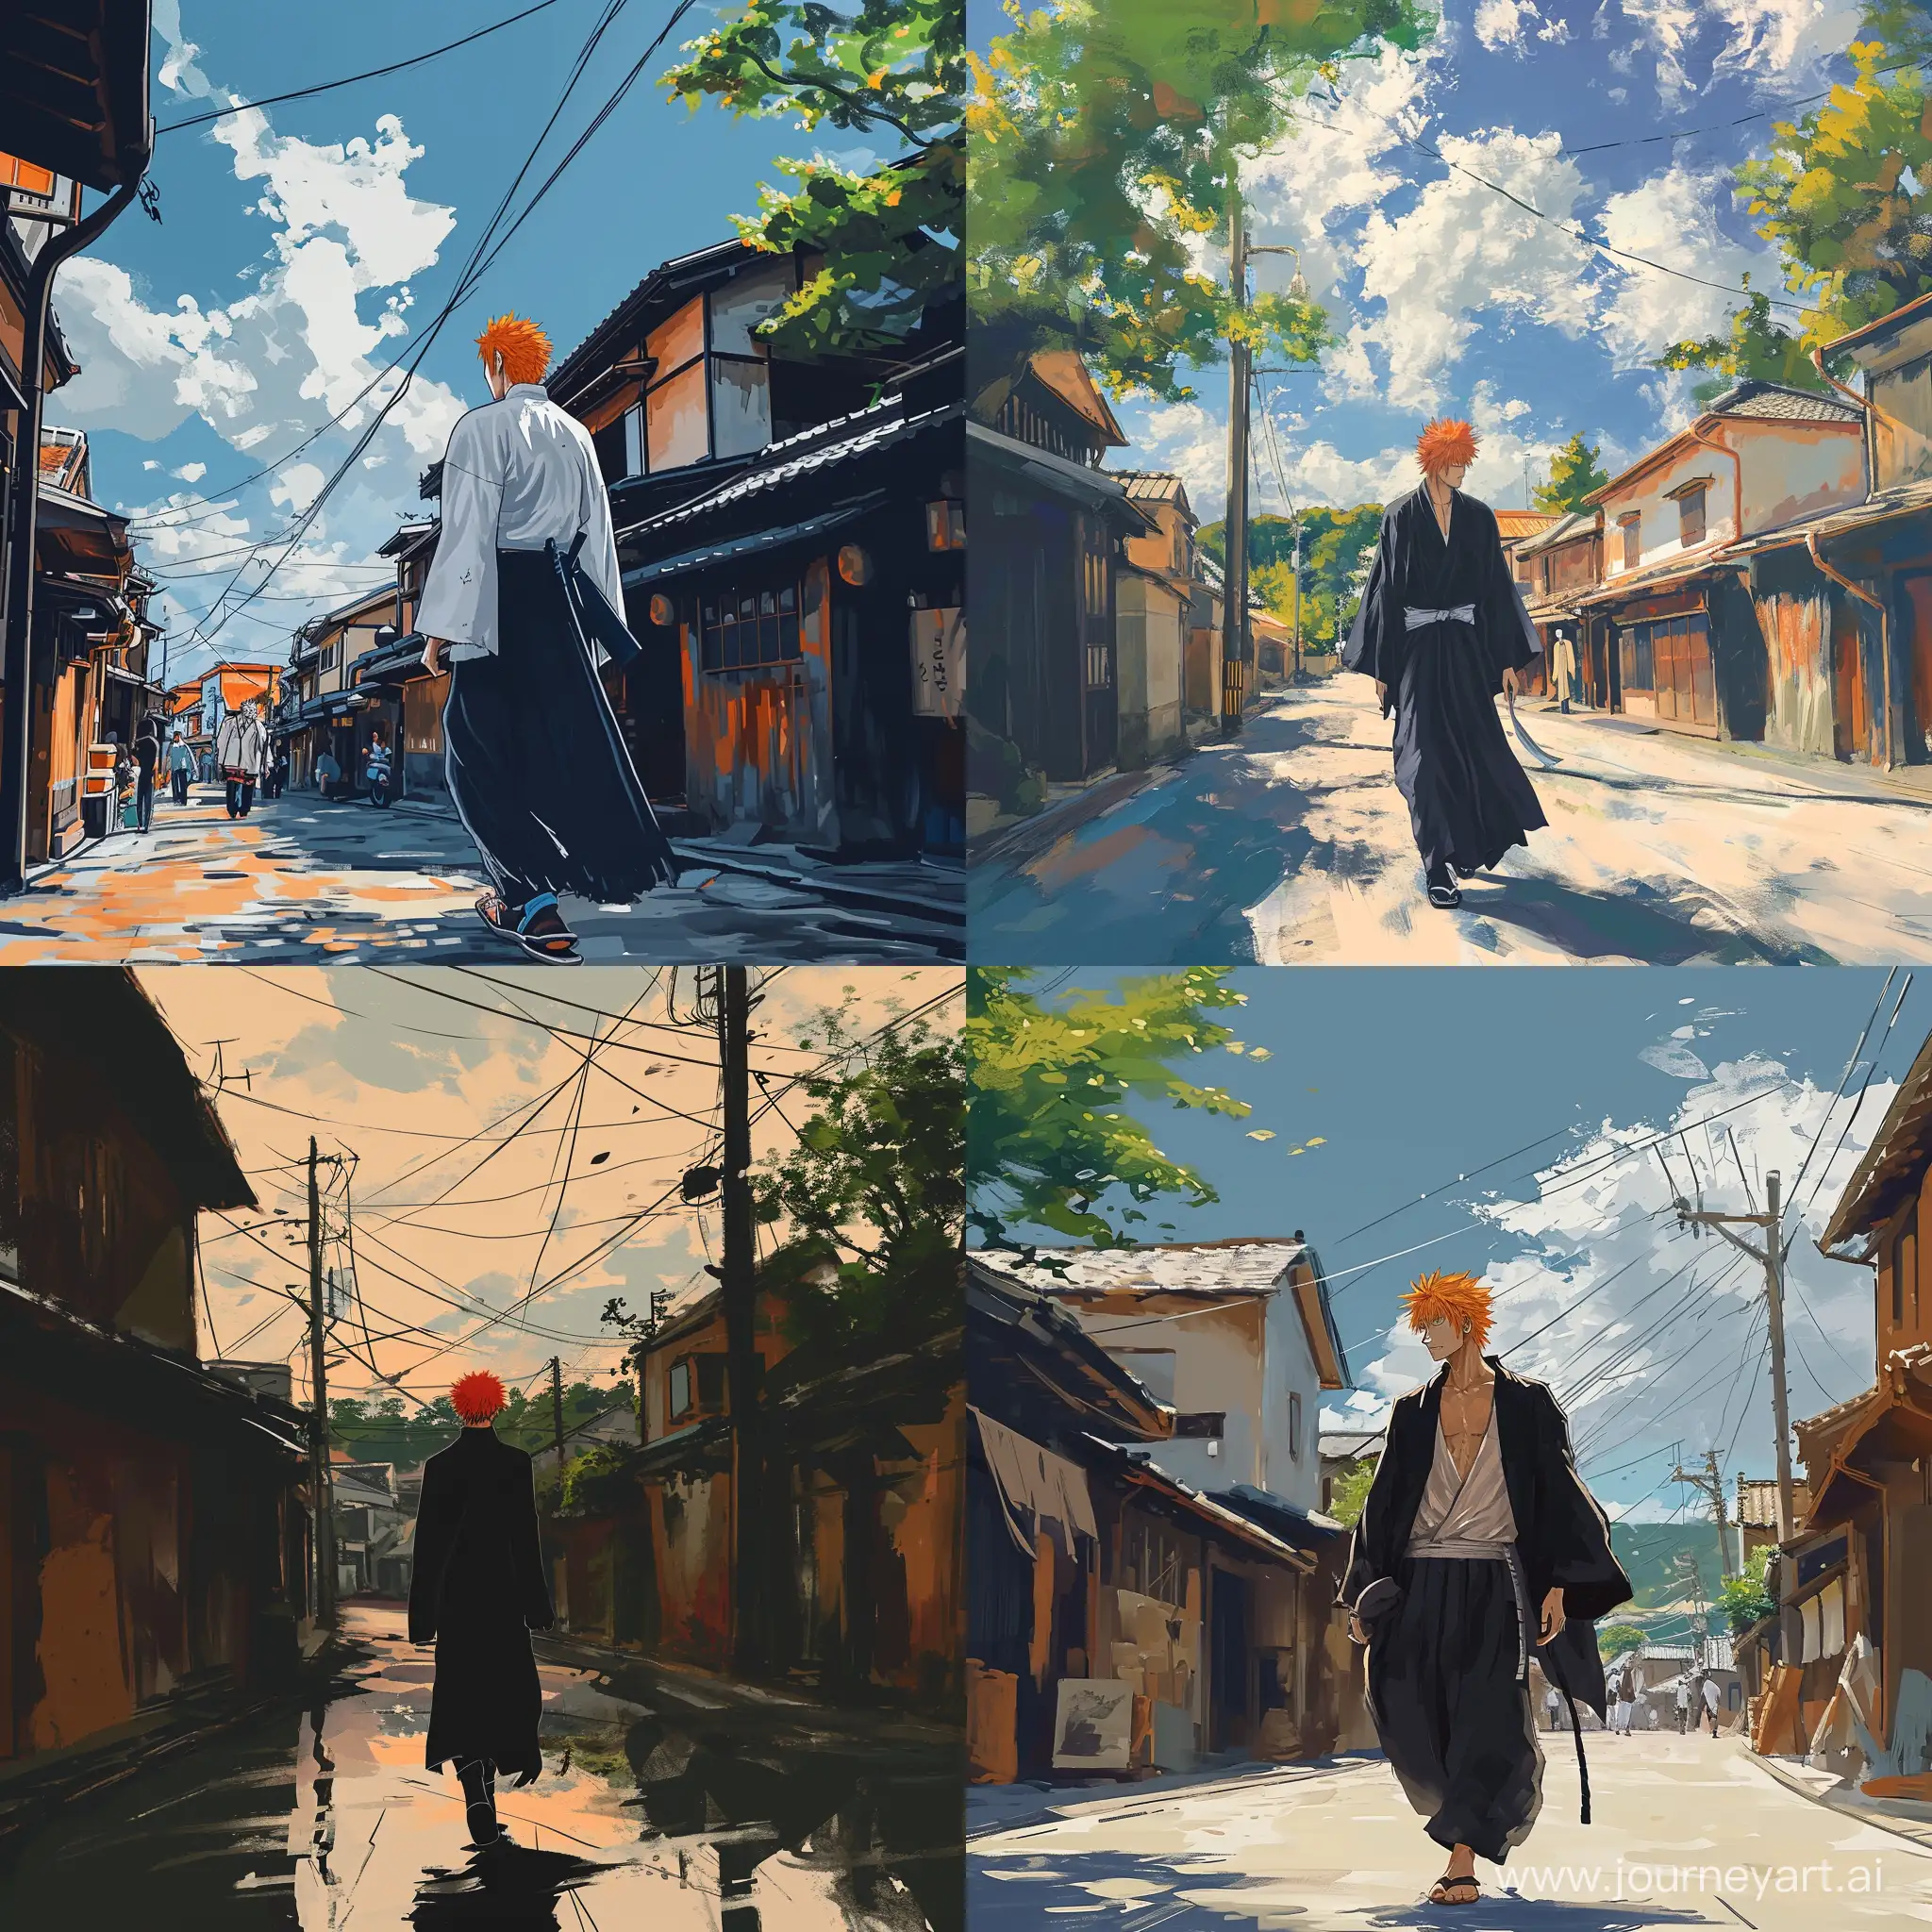 Kurosaki Ichigo from Bleach anime walking in karakura town Japan anime illustration style and digital painting